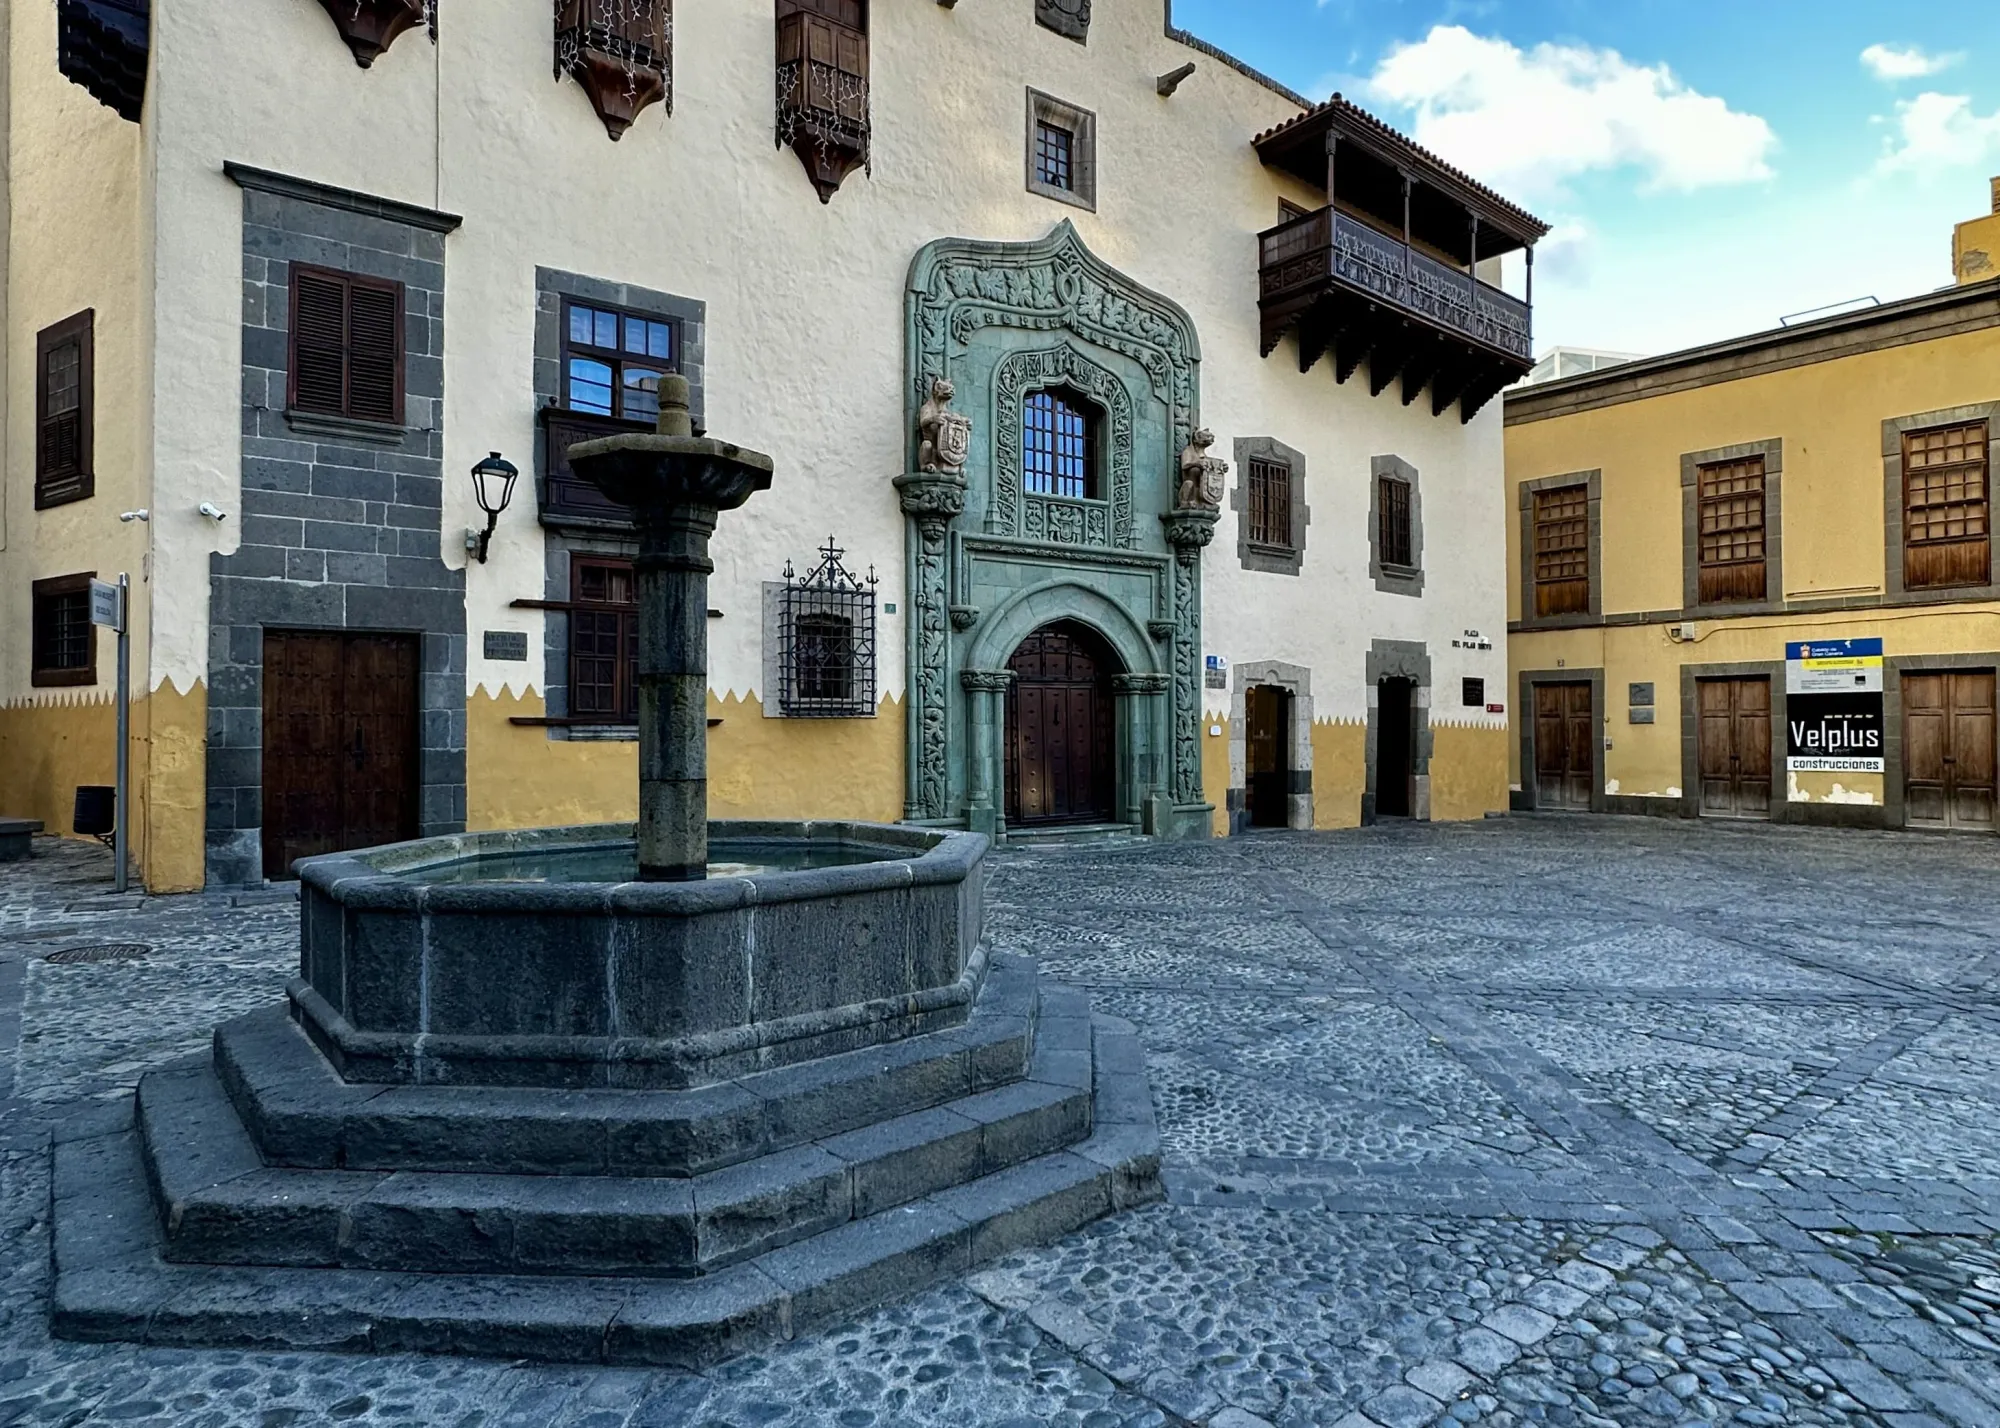 Historic Town of Vegueta